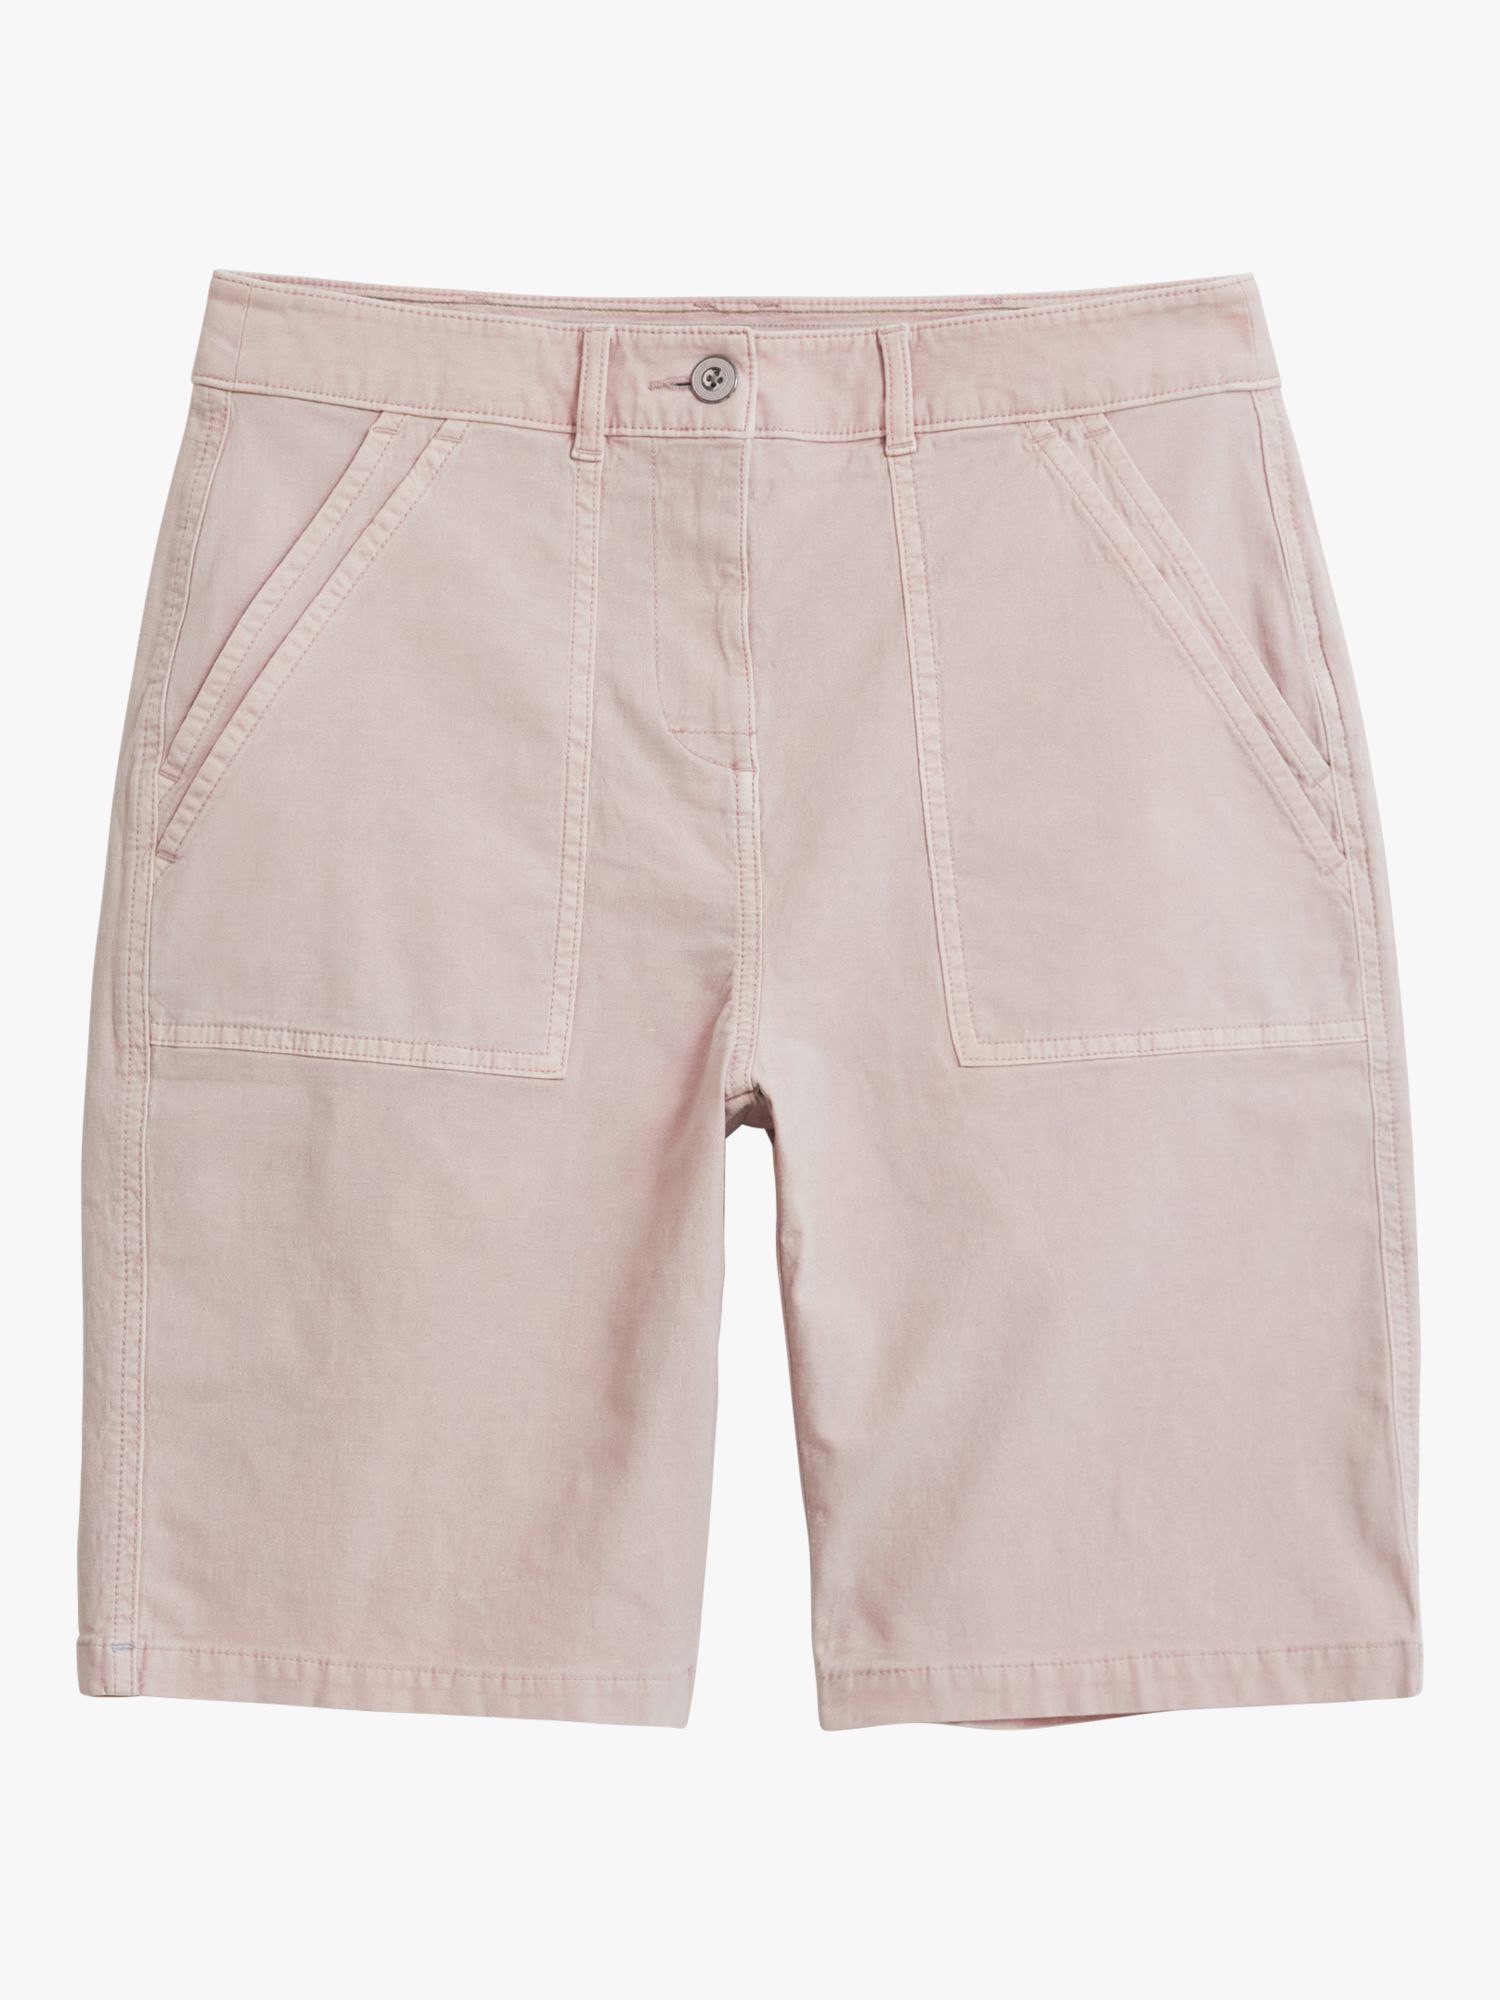 White Stuff Twister Linen Blend Shorts, Light Pink at John Lewis & Partners